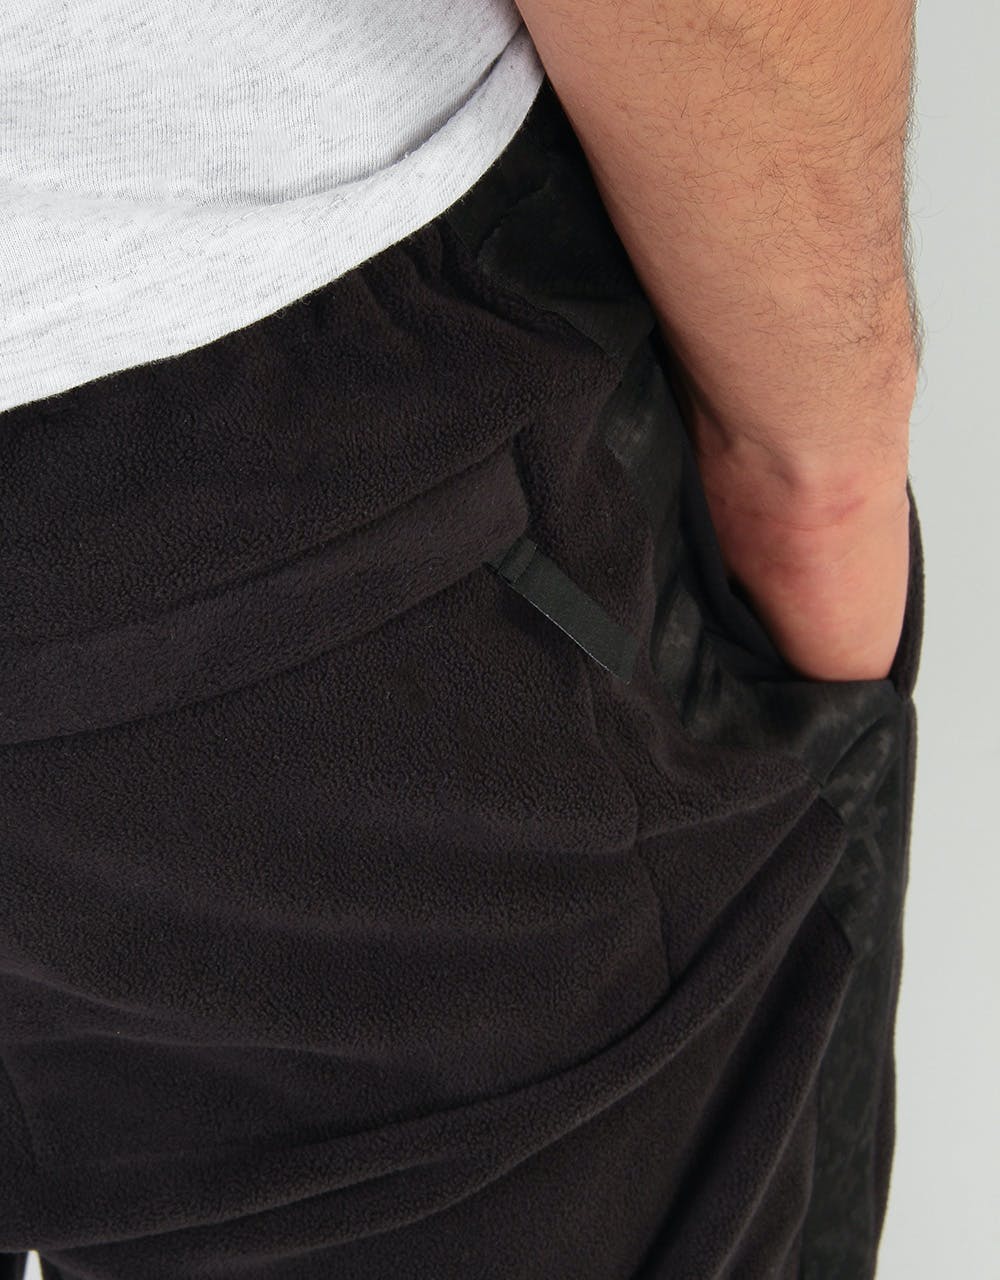 Nike SB Novelty Fleece Pant - Black/White